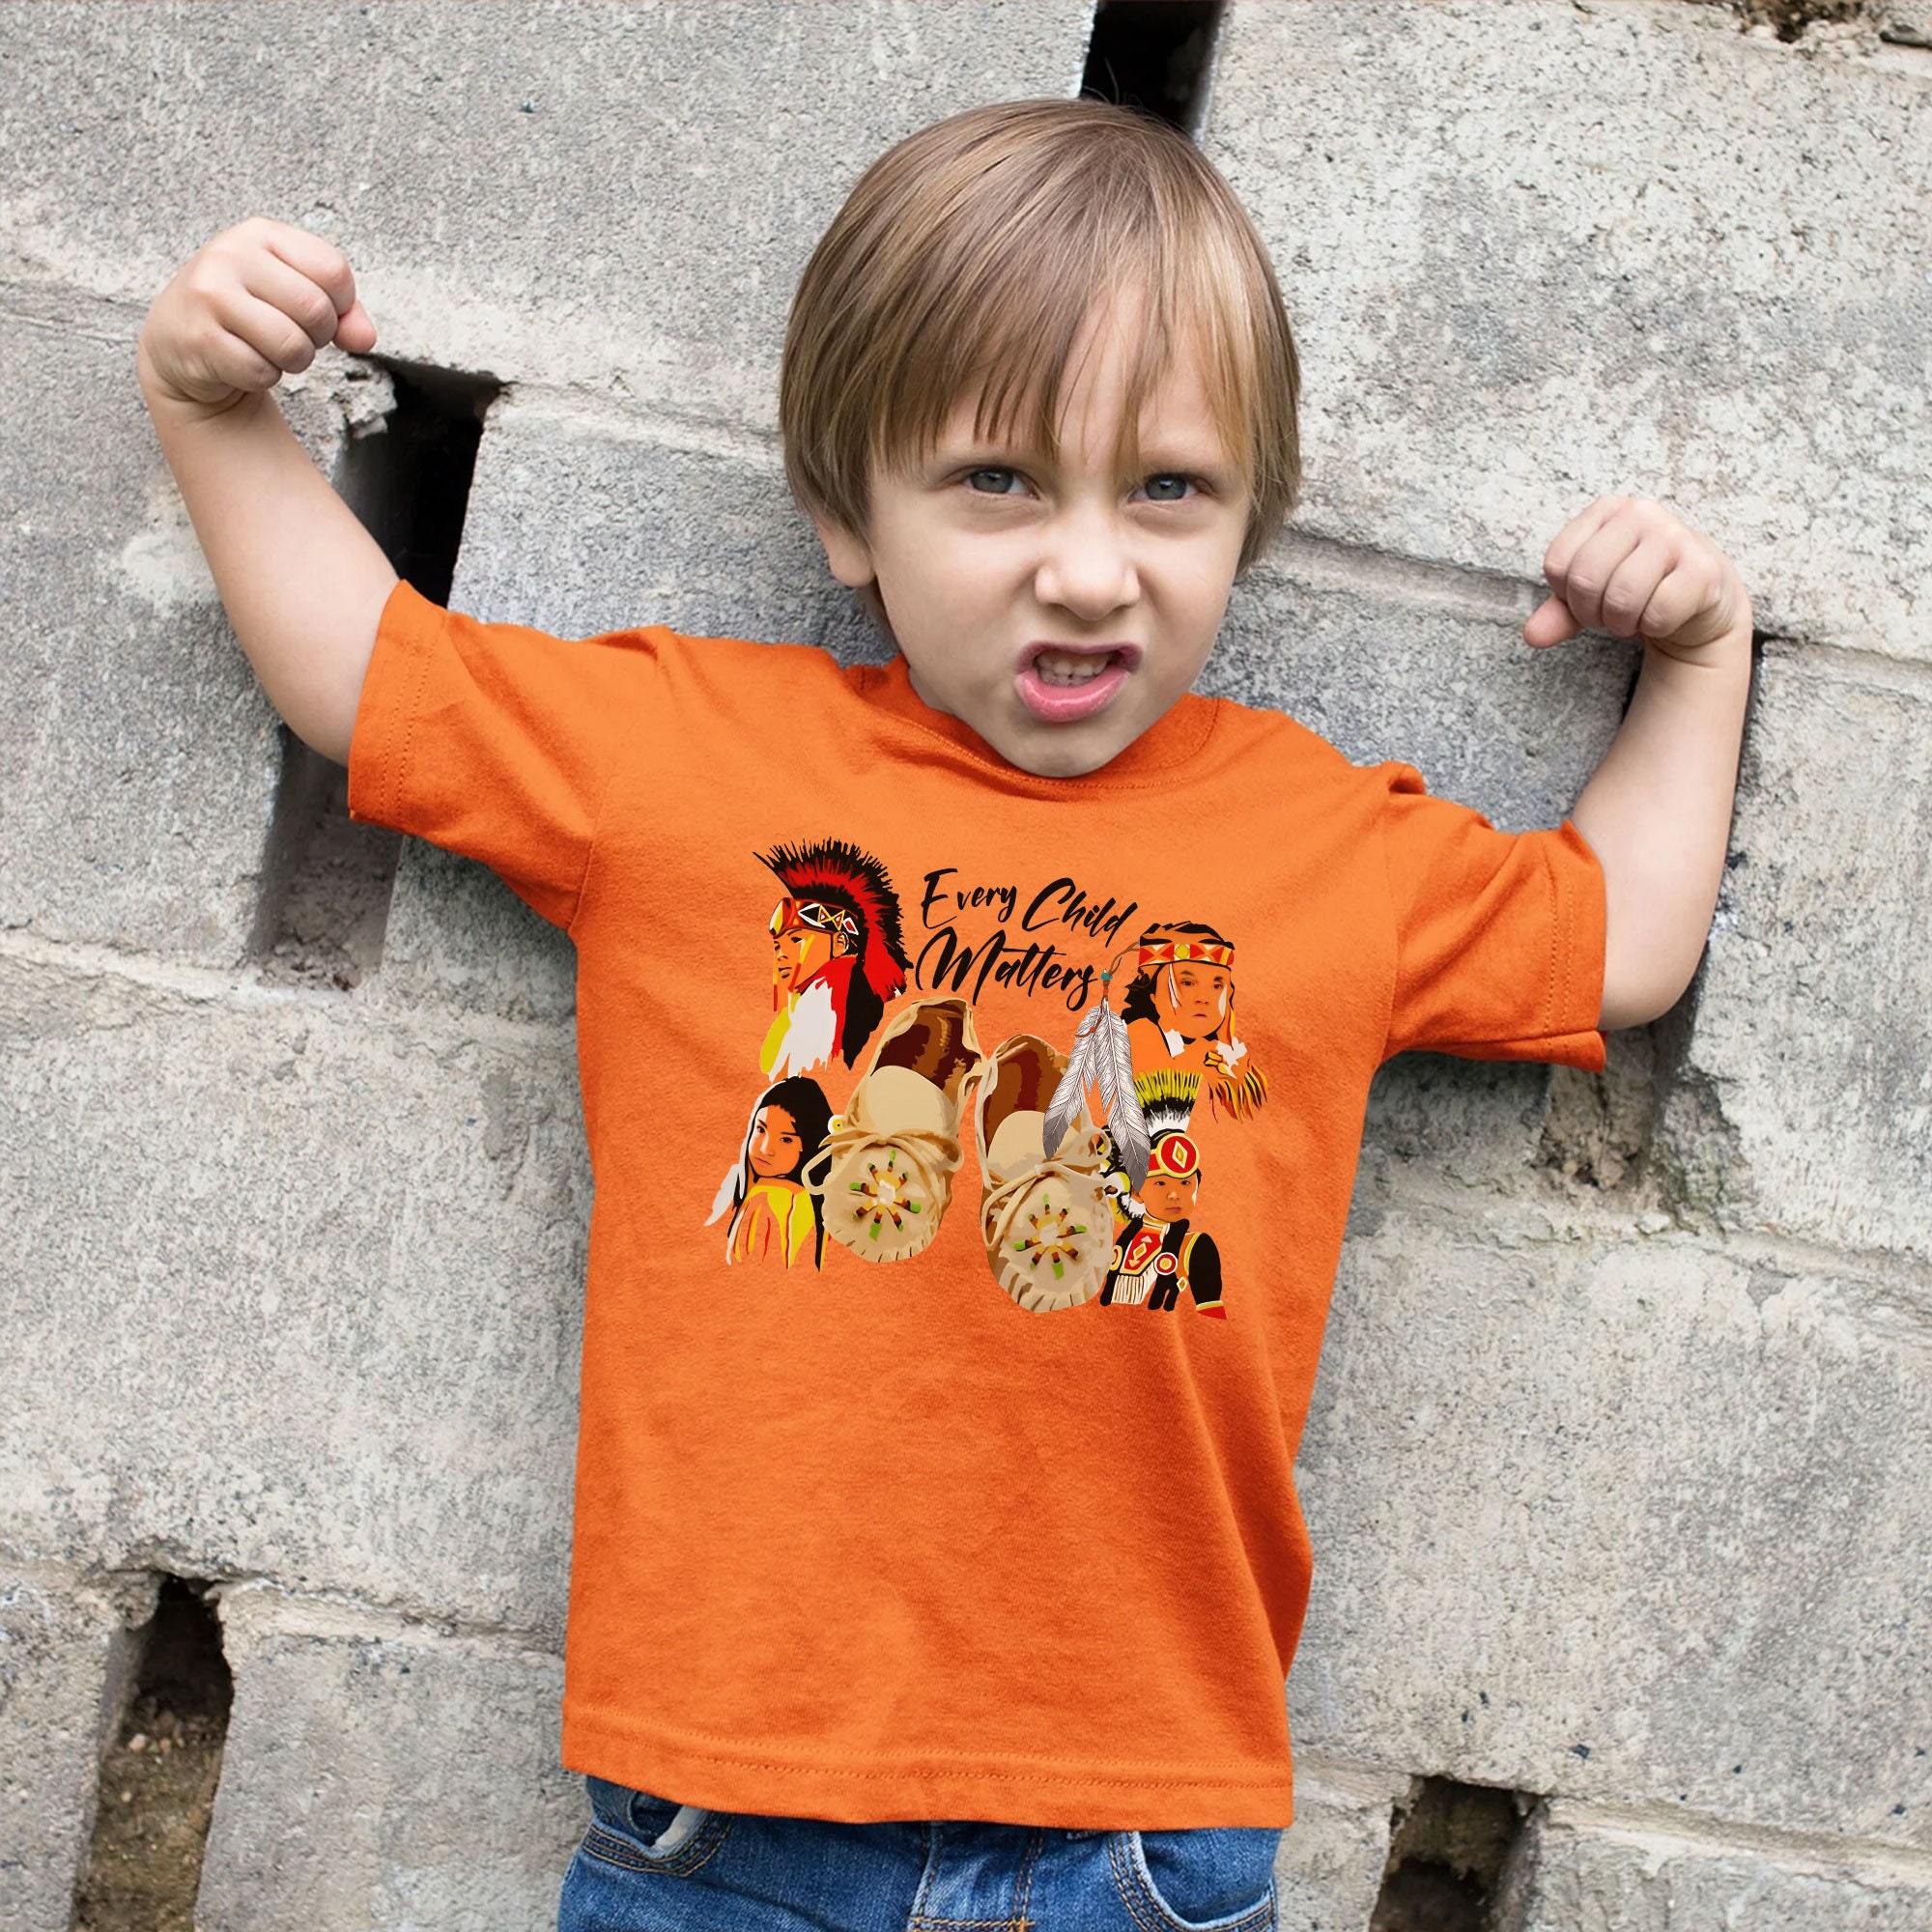 Every Child Matters Shirt Orange Day T-shirt American Native - Etsy